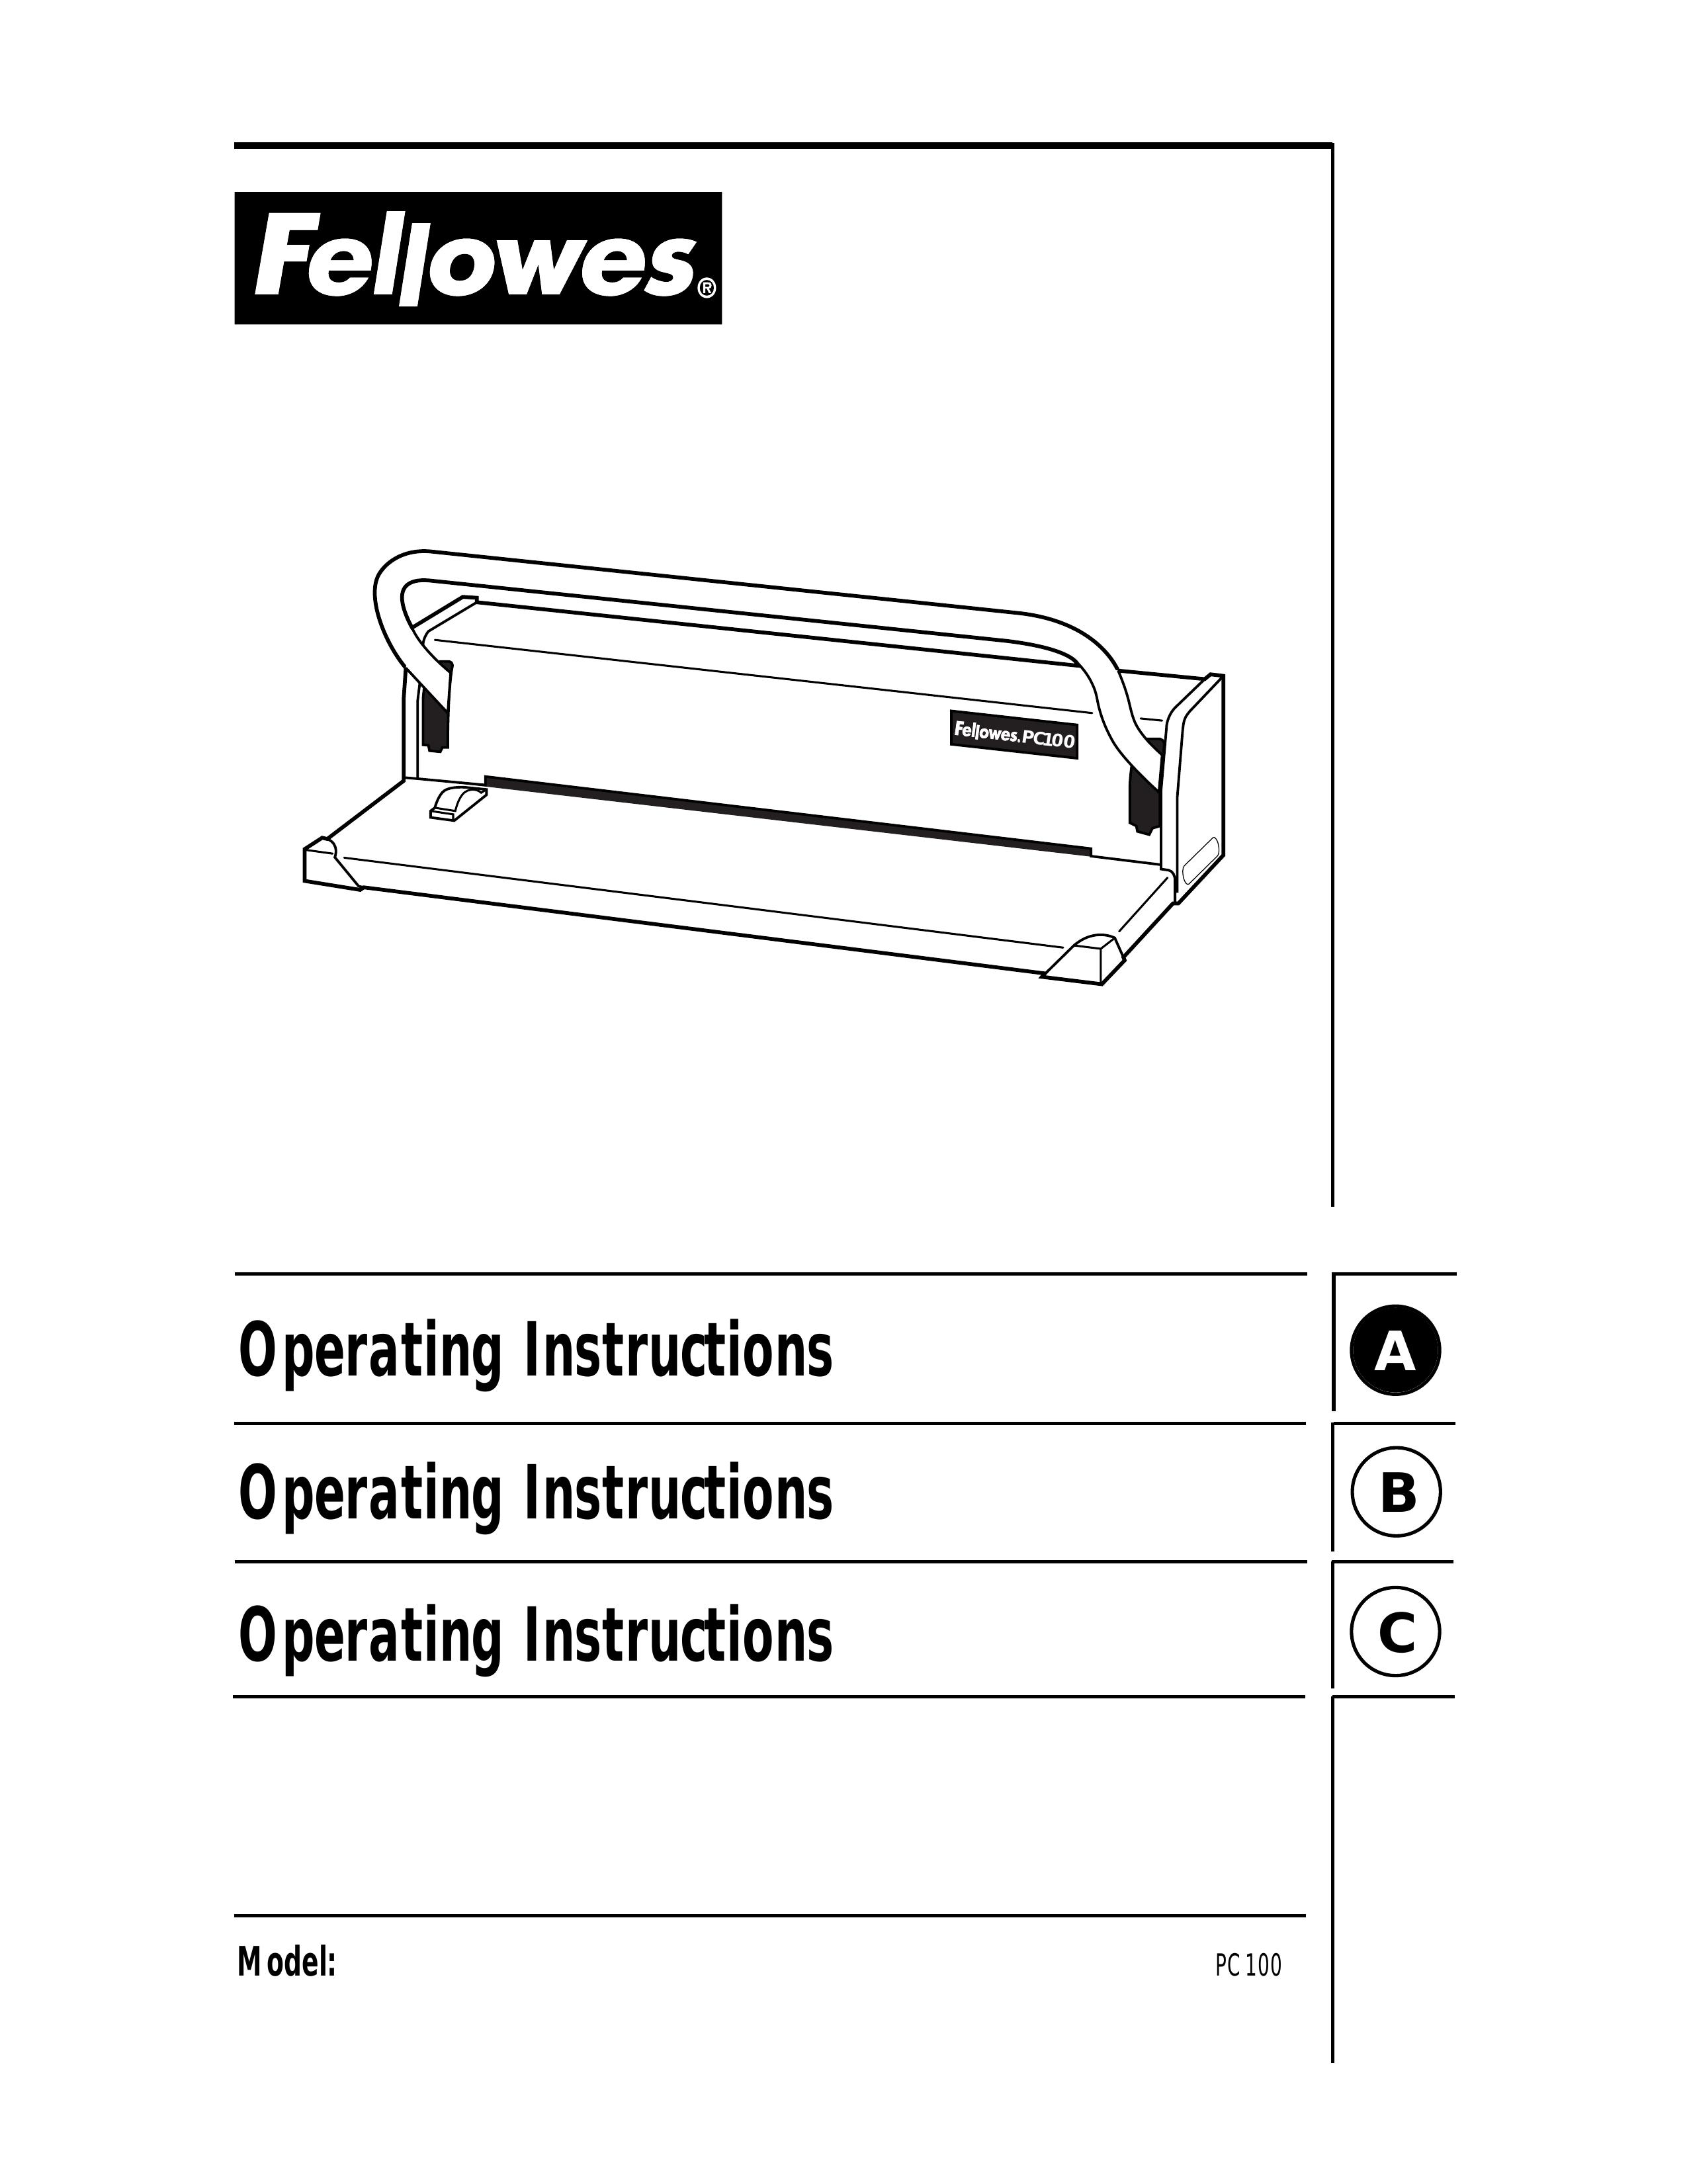 Fellowes PC 100 Brush Cutter User Manual